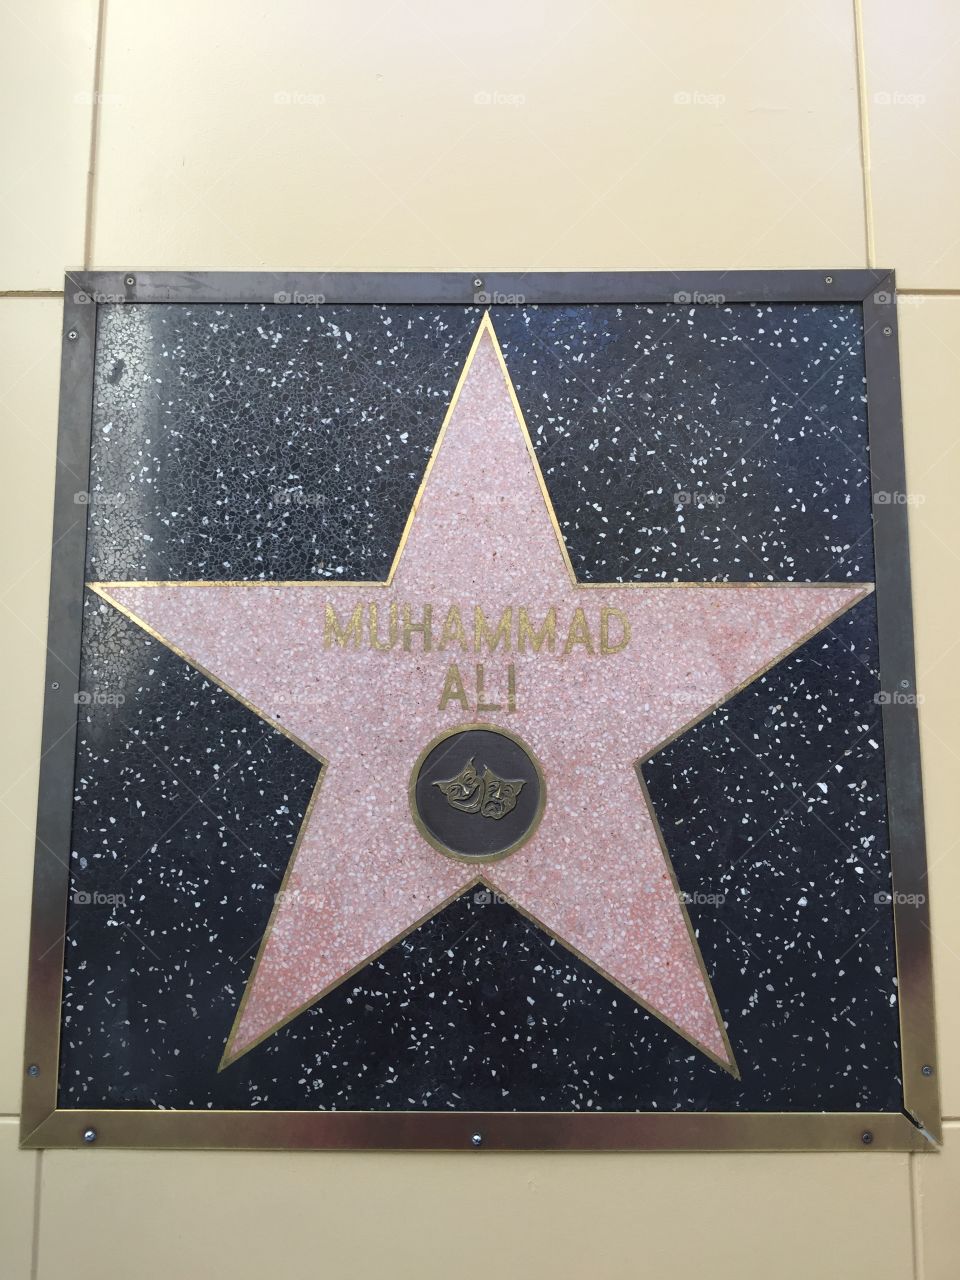 Muhammad Ali
Hollywood
California
Famous 